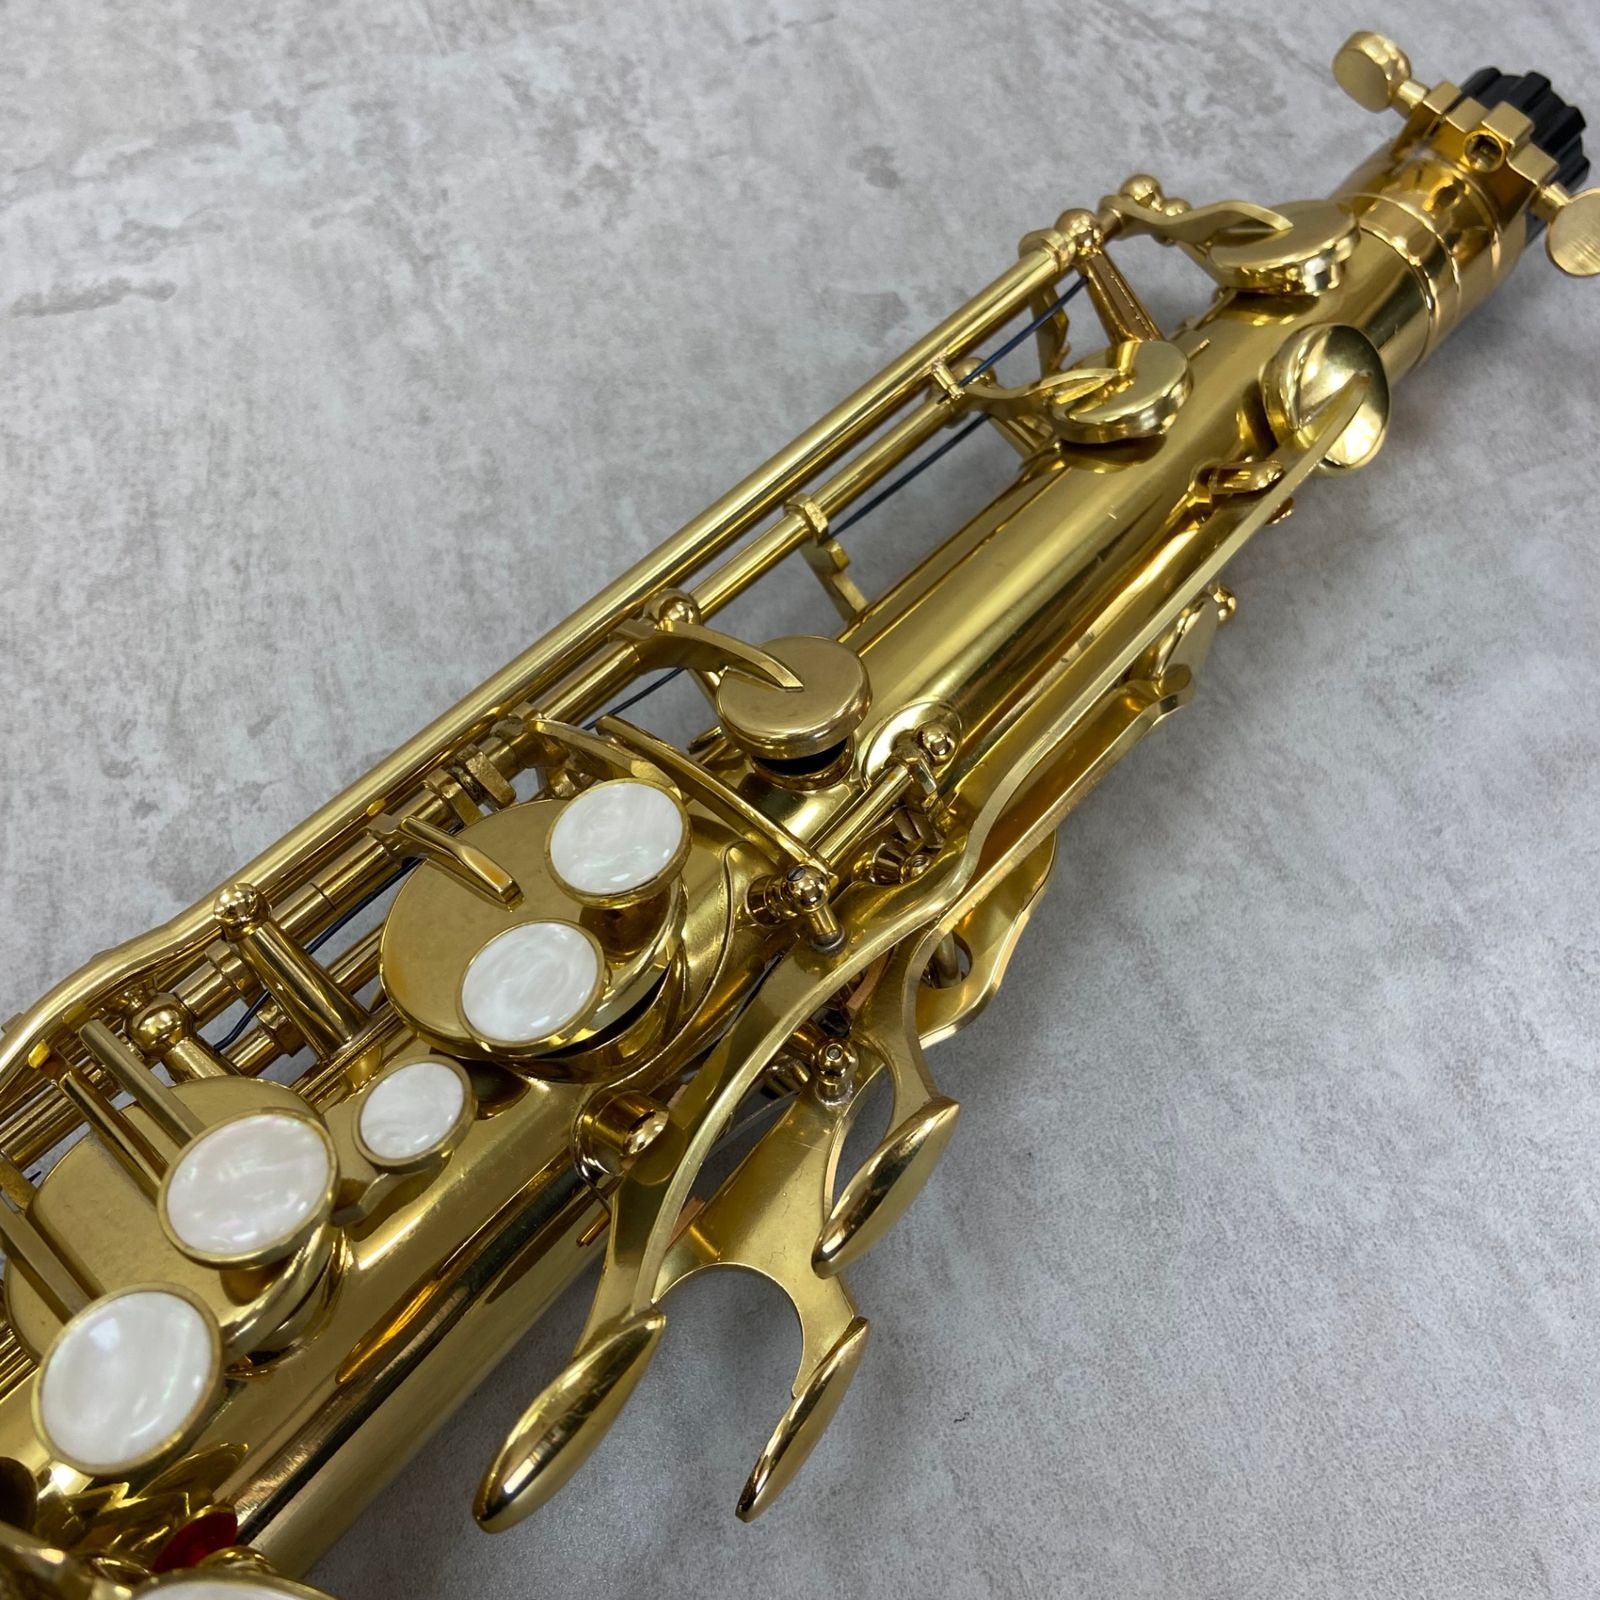 Kaerntner　ケルントナー　テナーサックス 管楽器　Saxophone　サクソフォン　クリアラッカー　初心者　入門用　付属品多数